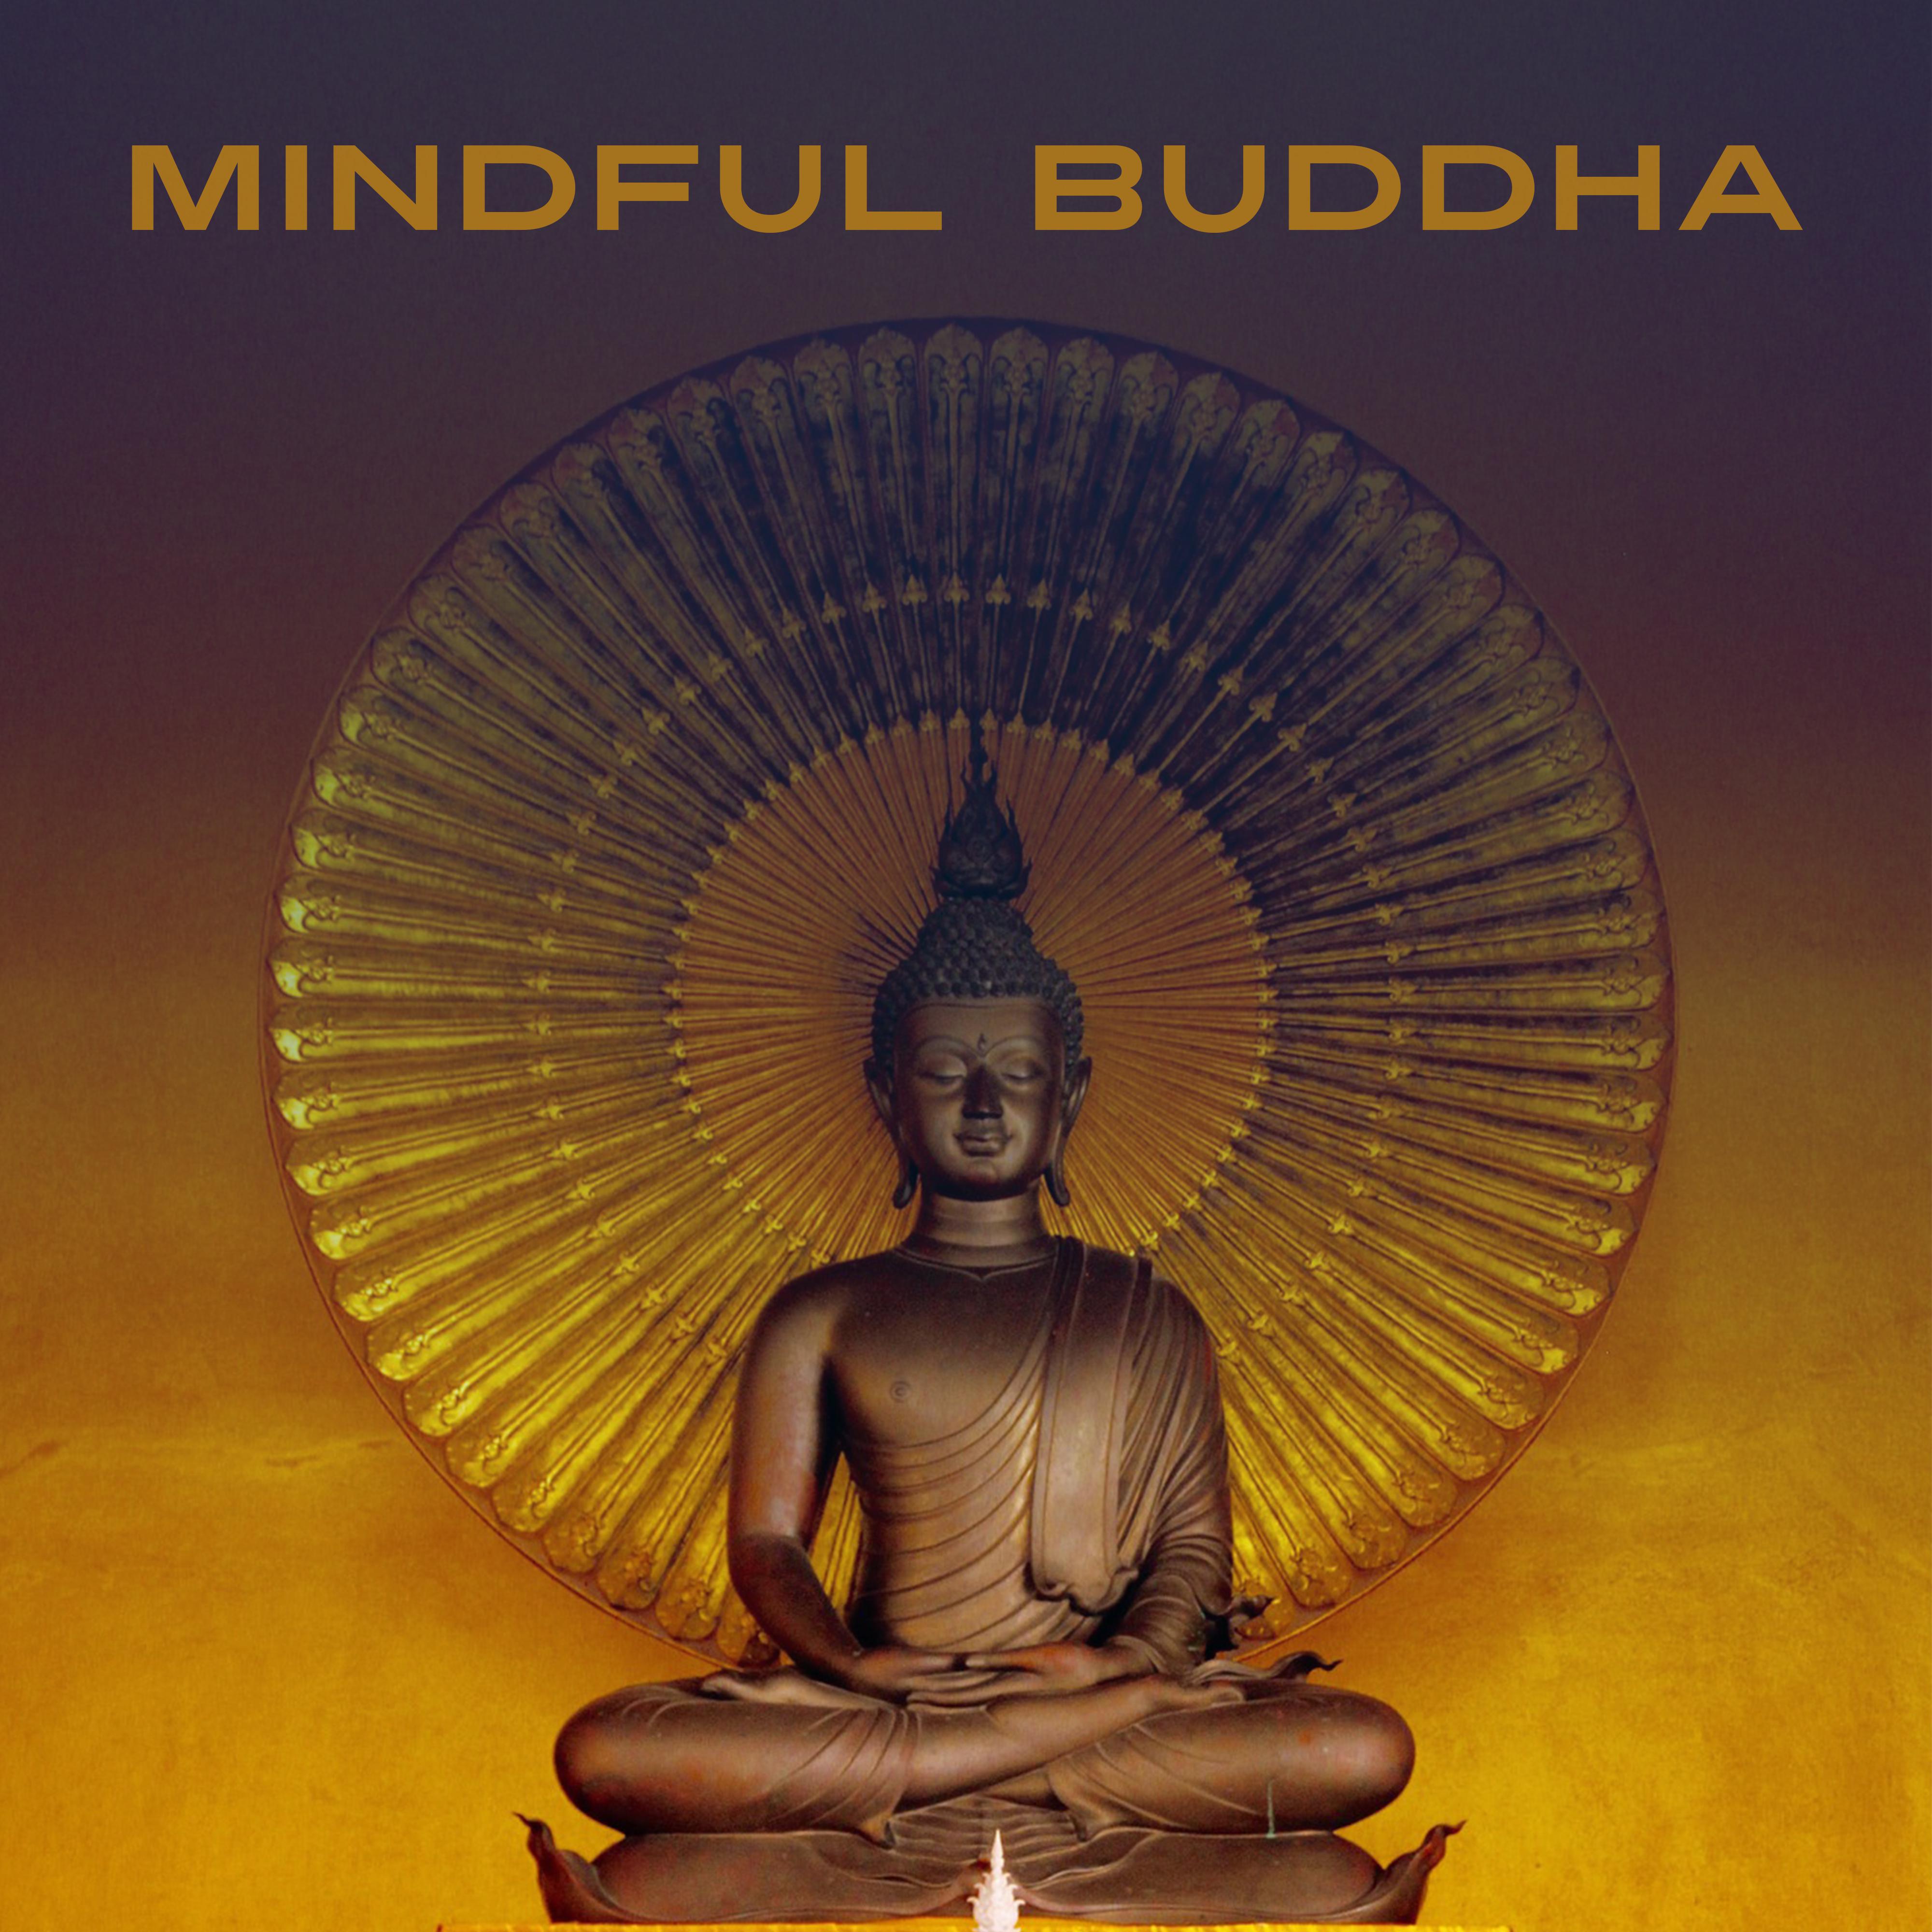 Mindful Buddha  New Age Music for Meditation, Mindfulness Practice, Reiki Music, Yoga, Be Mindful